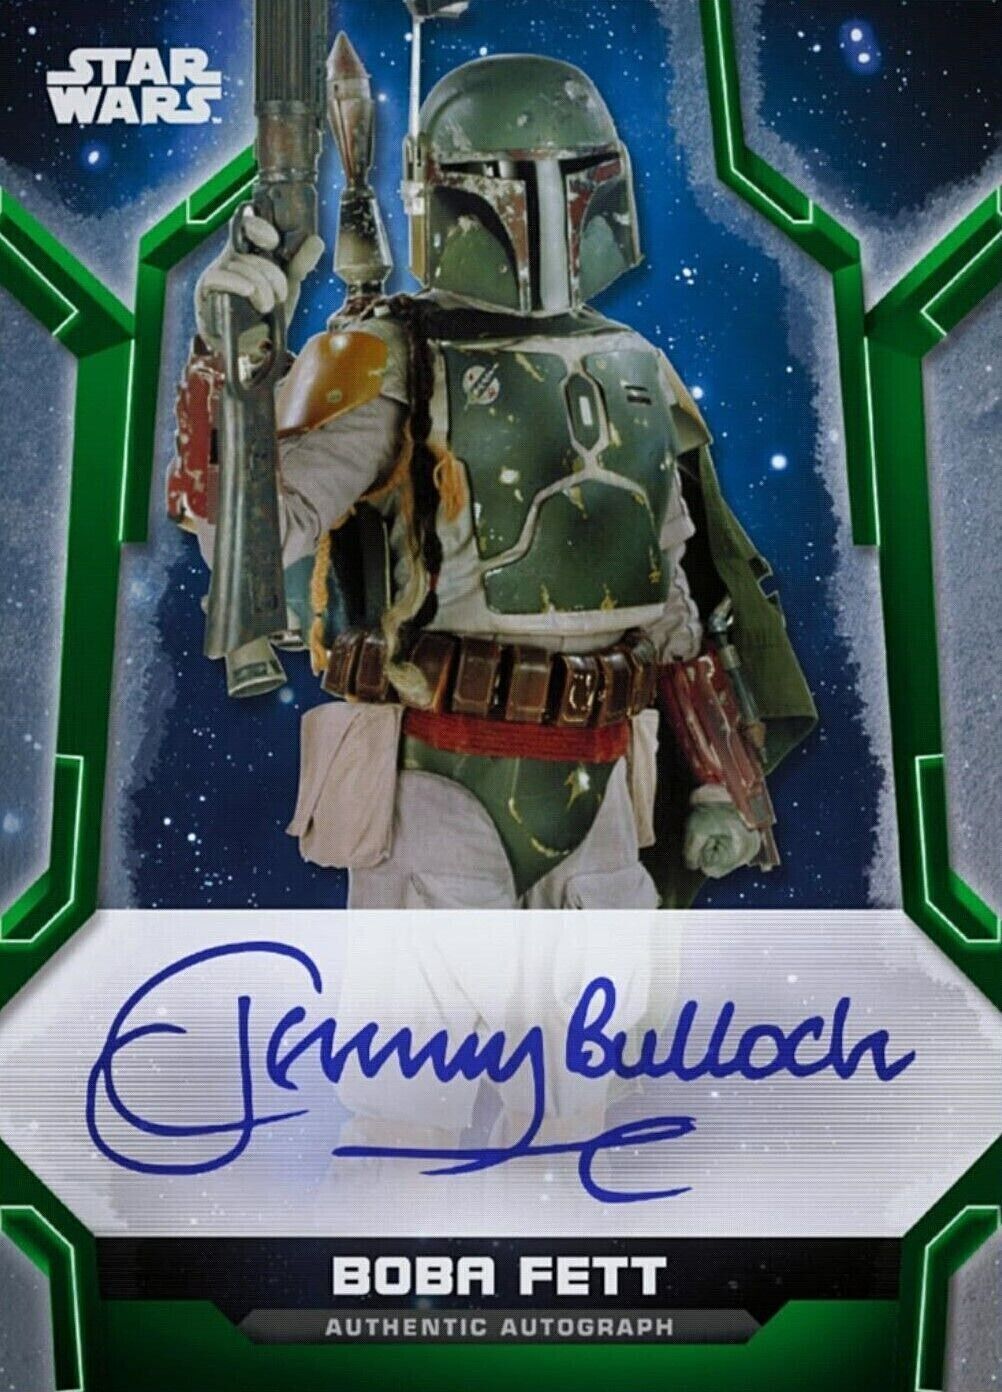 Topps Star Wars Authentic Autograph JEREMY BULLOCH as BOBA FETT SIG Digital Card